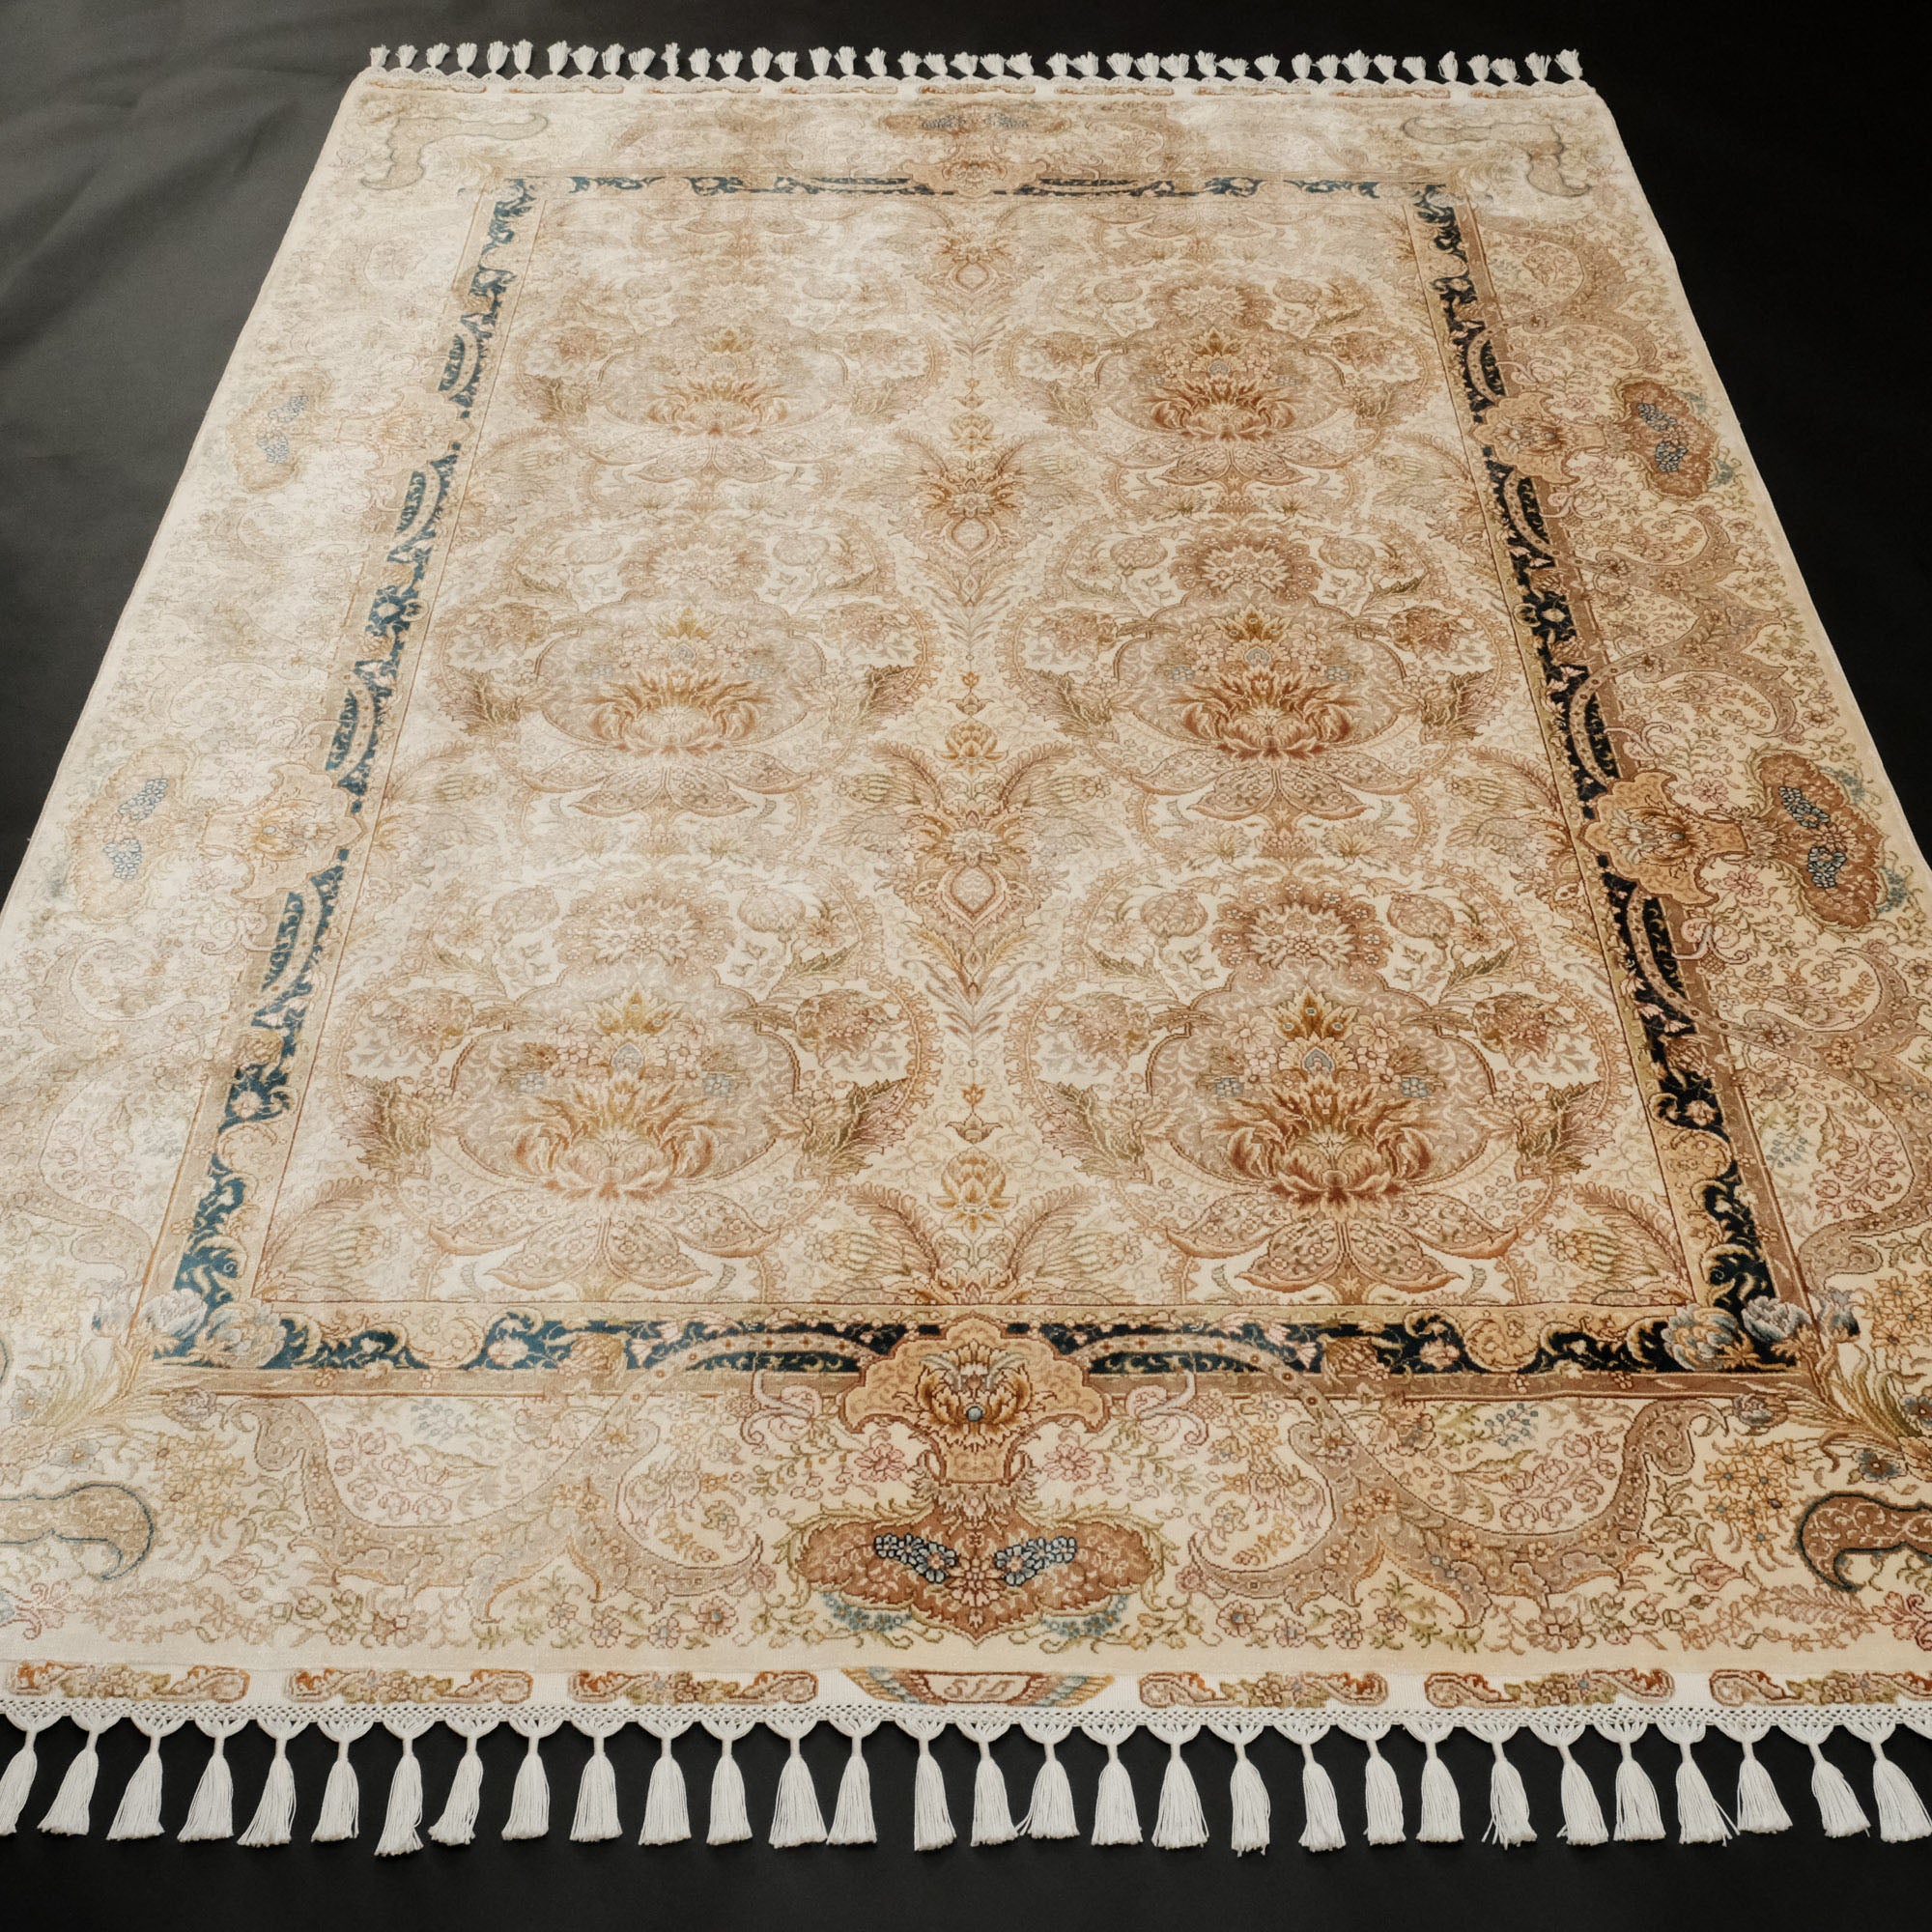 Hand Woven Cream Viscose Yarn Classic Carpet